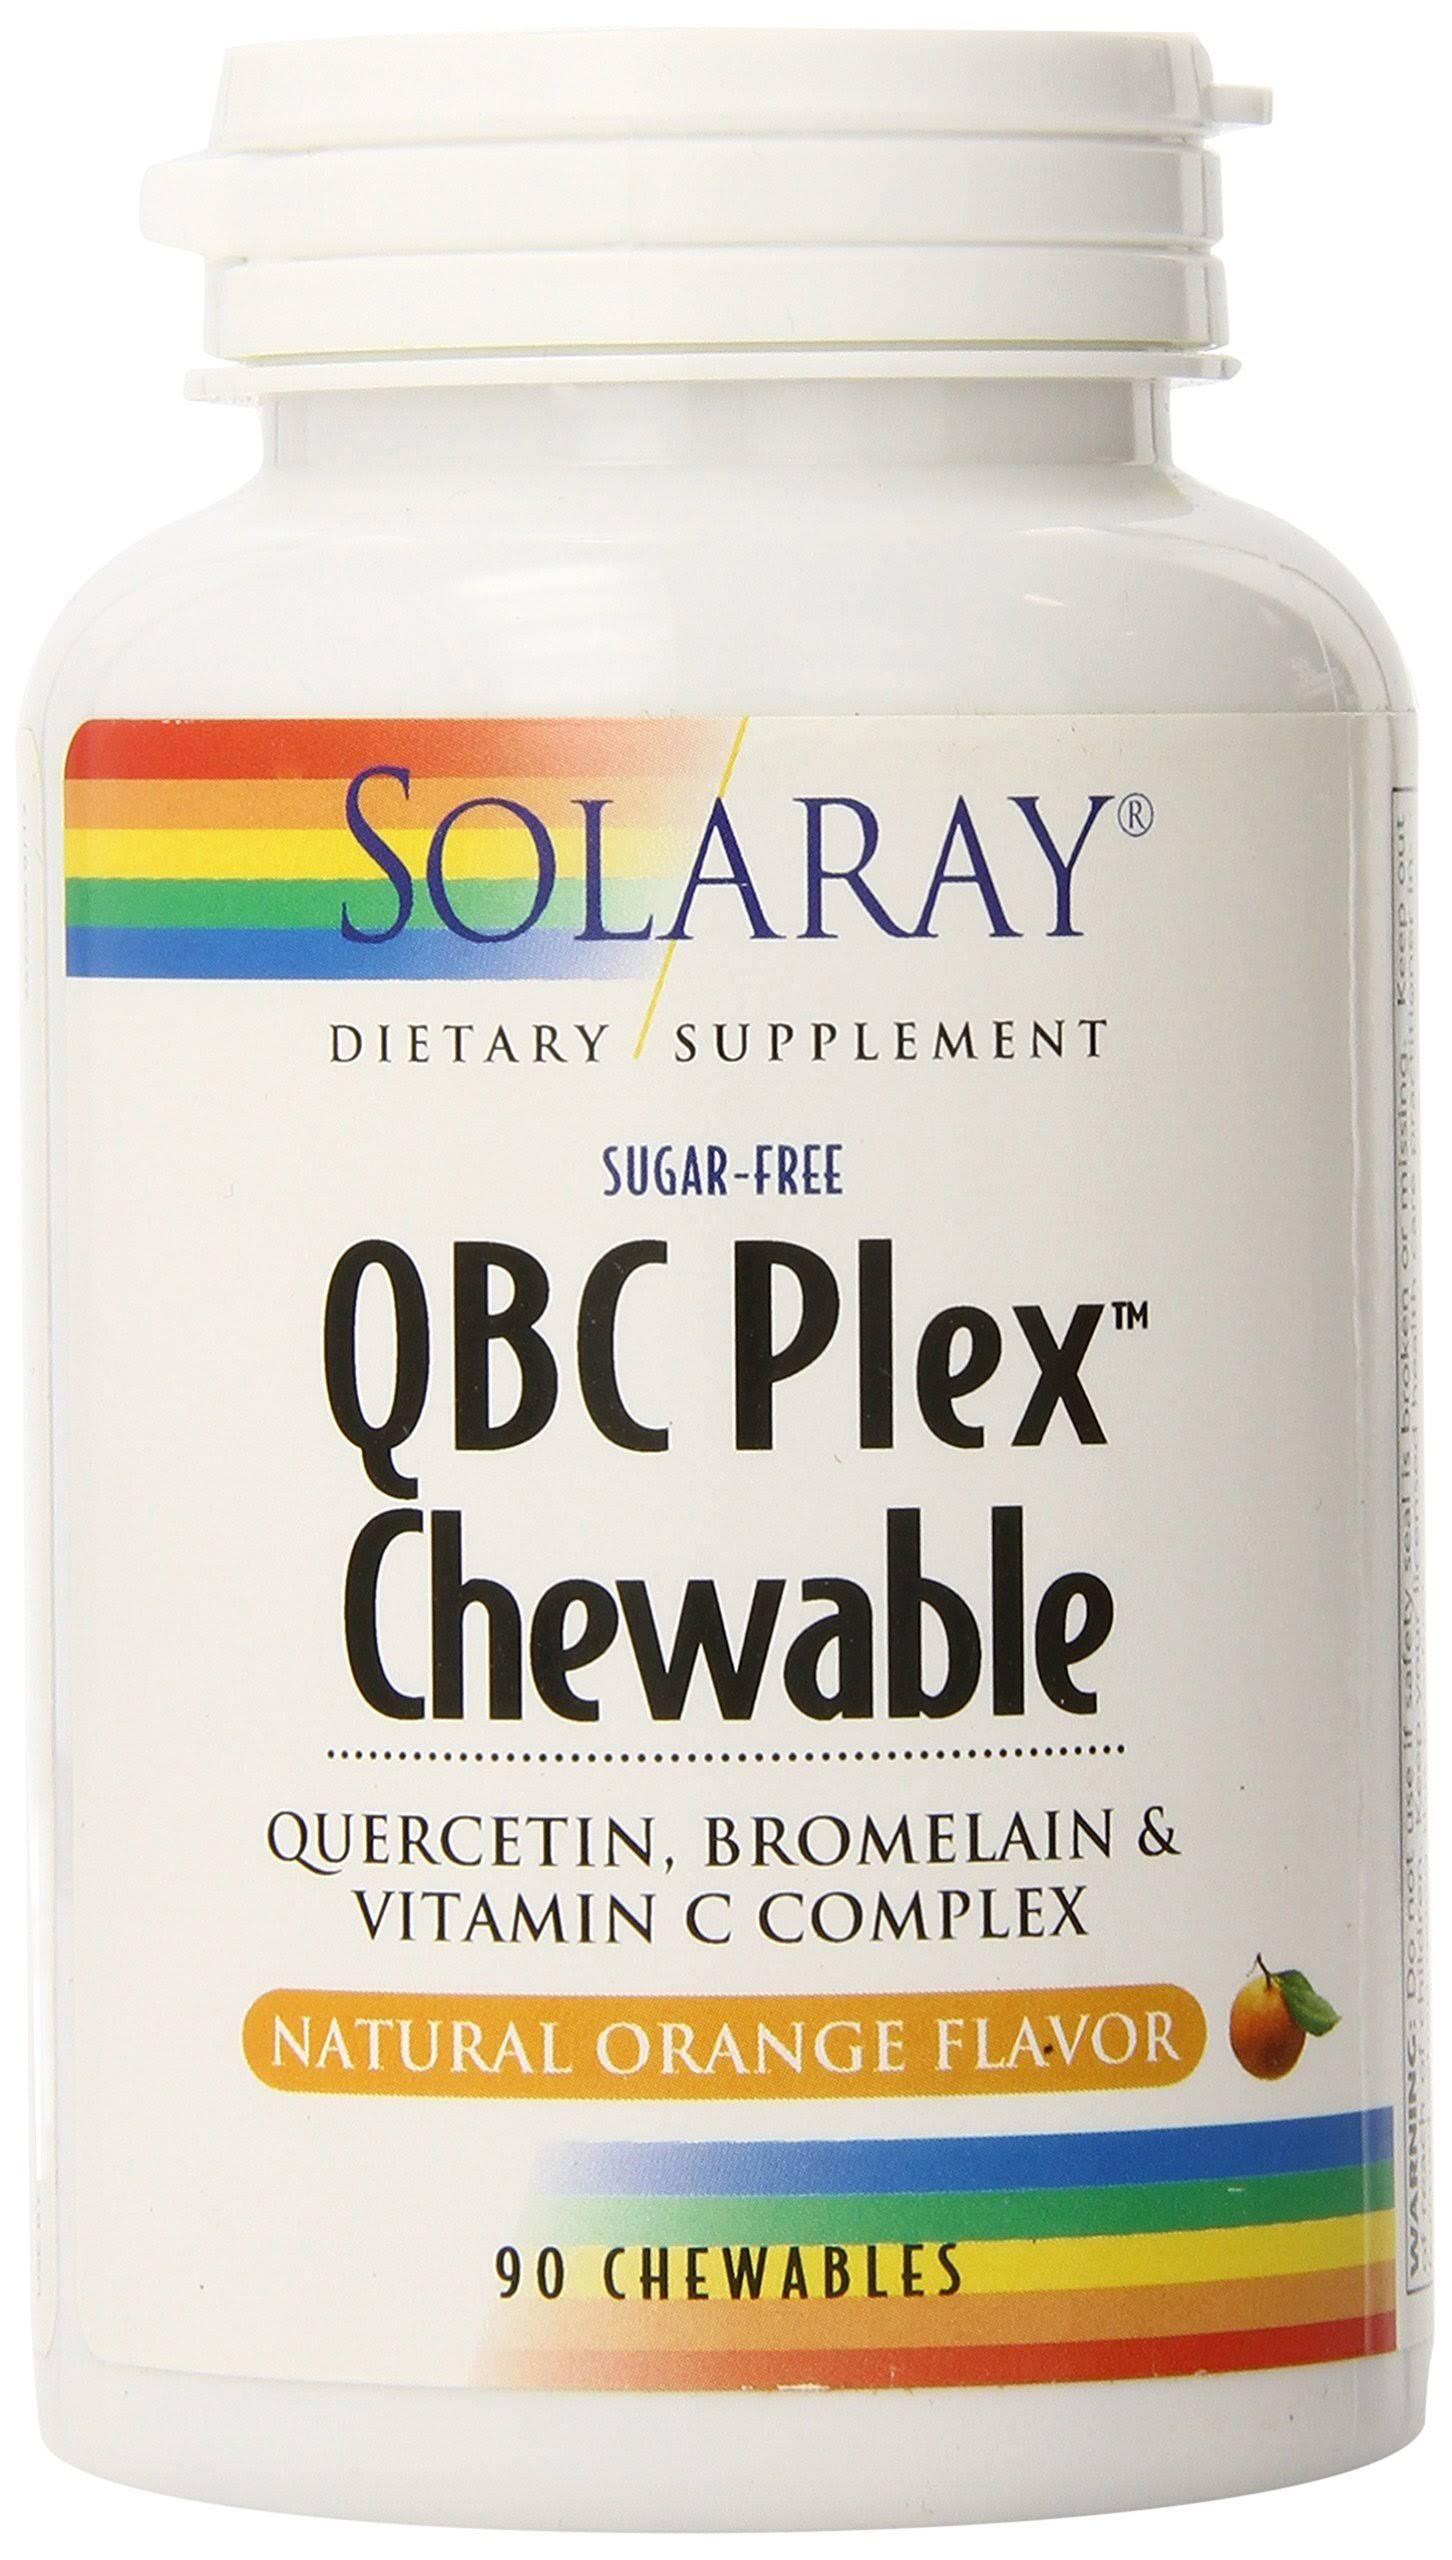 Solaray Qbc Plex Chewable Dietary Supplement - 90 Chewables, Orange